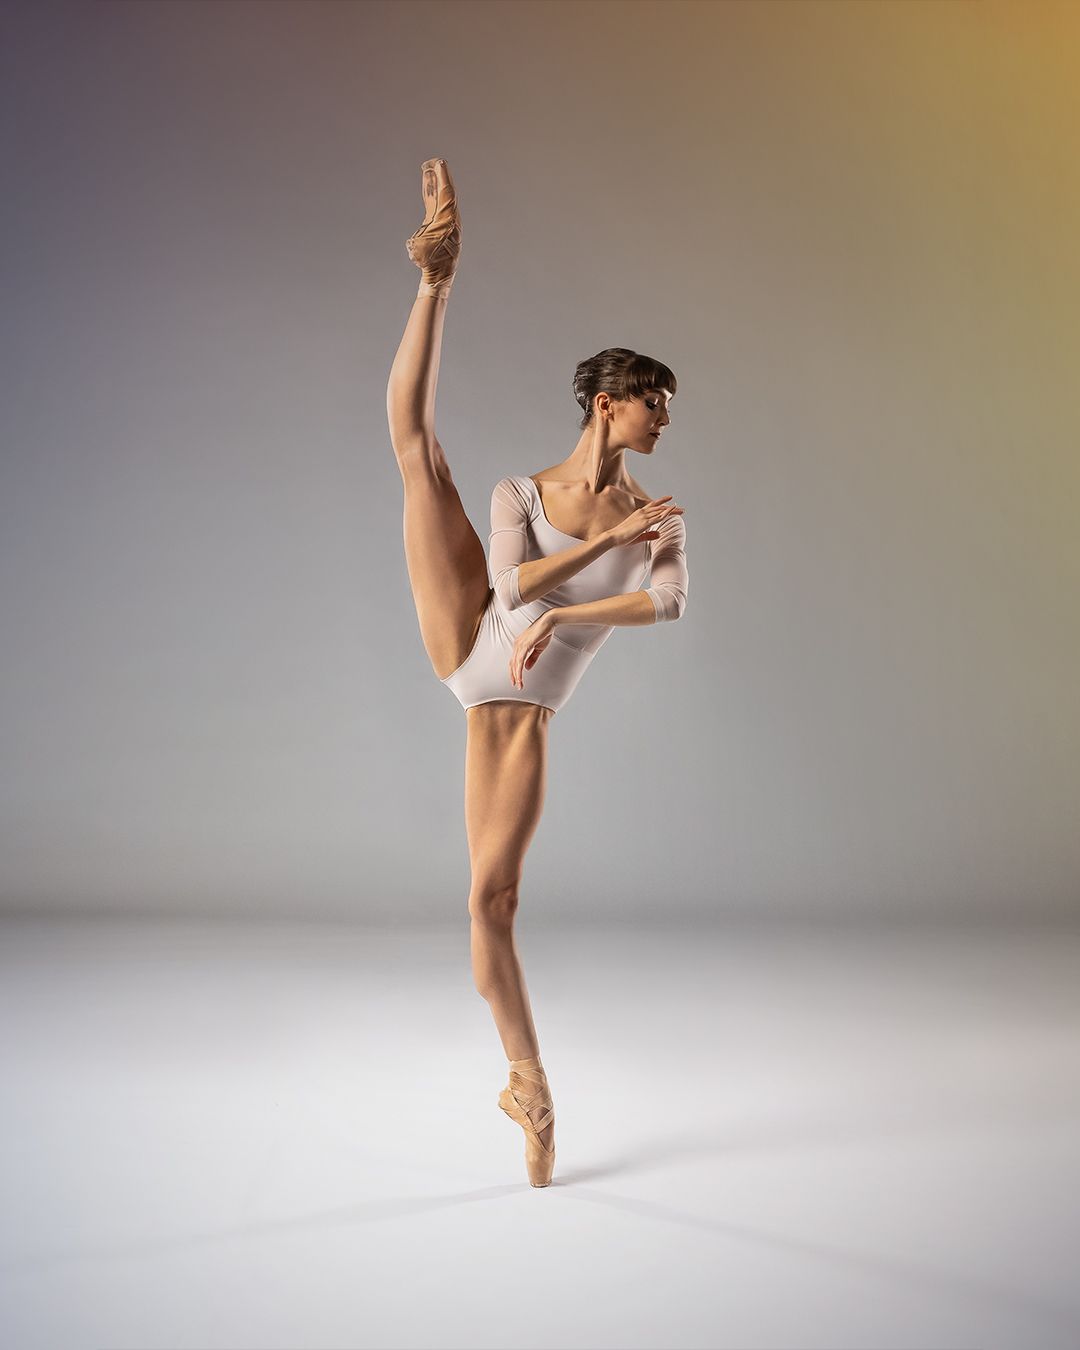 Katie Simpson - Image Belongs to the Royal Winnipeg Ballet